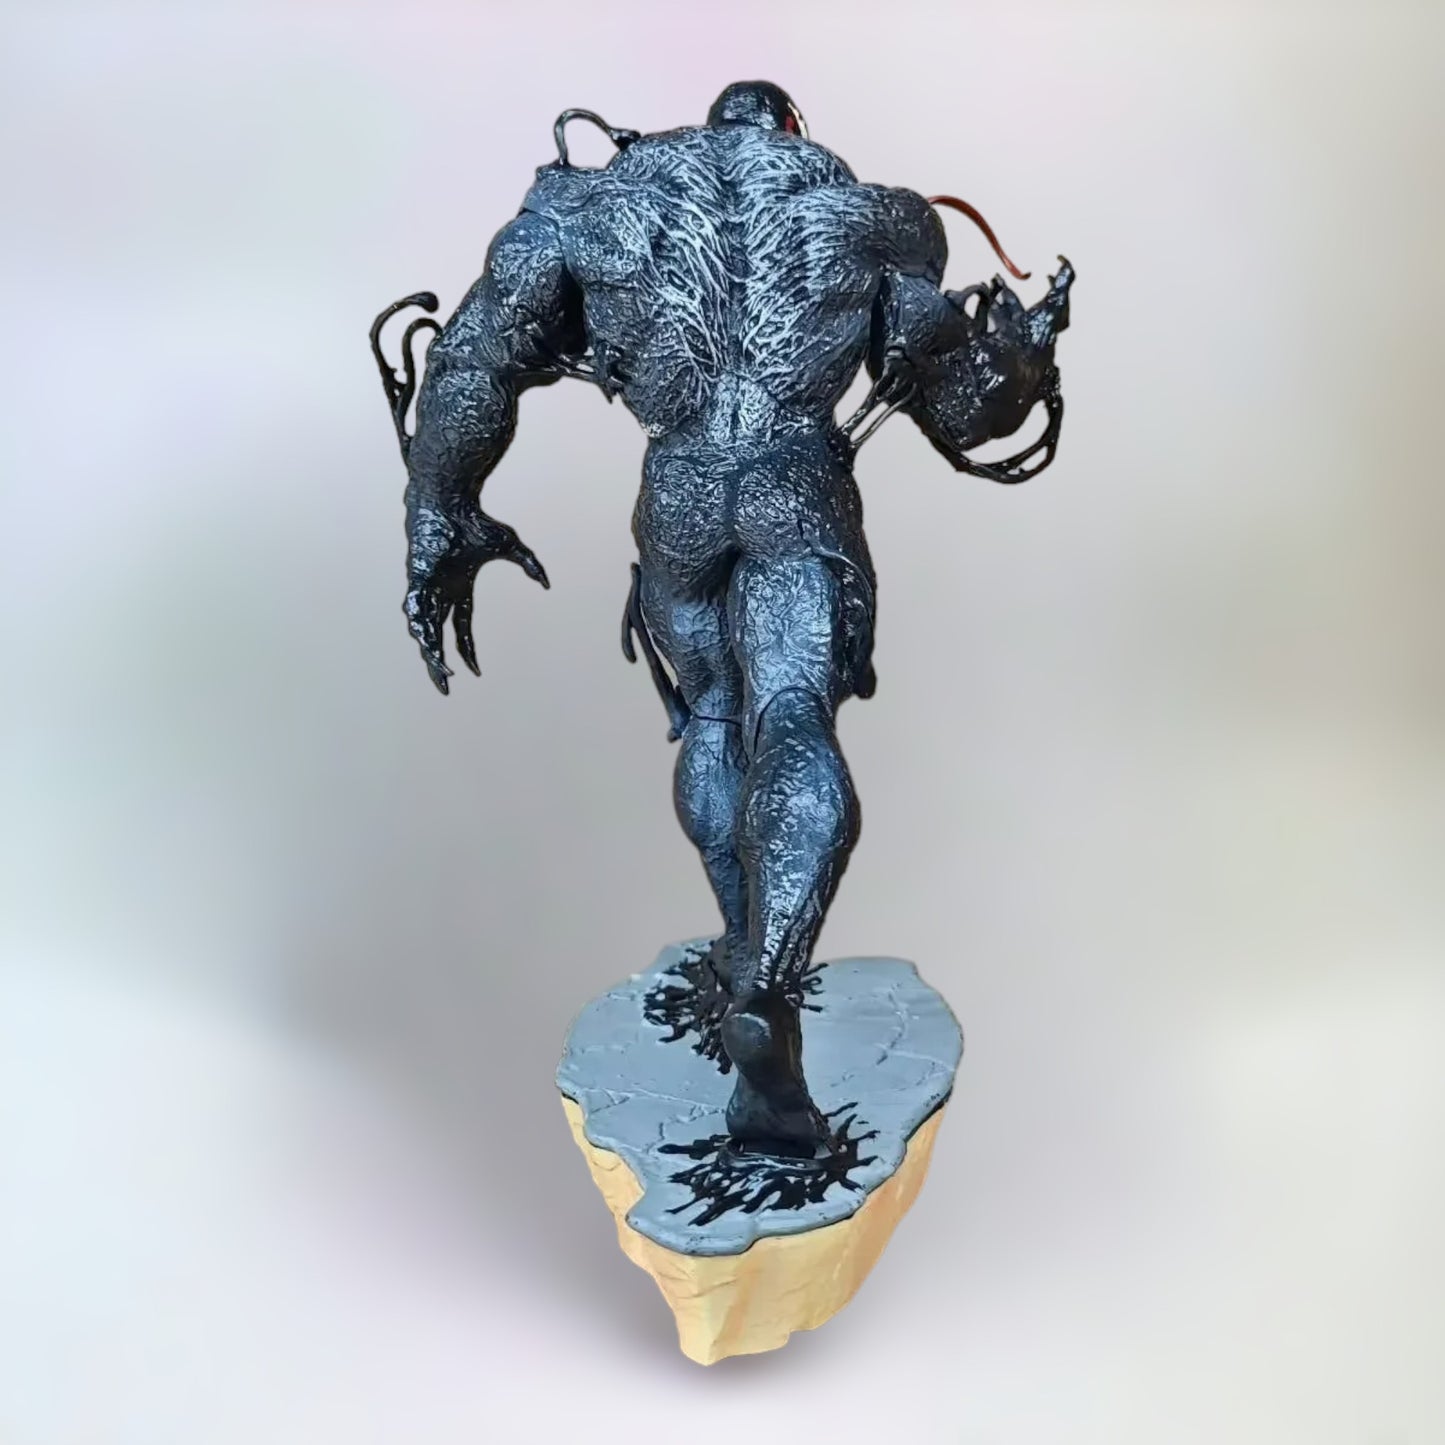 Venom Figure The Last Dance. The back side of a 30cm realistic Venom figure with a plain white background.